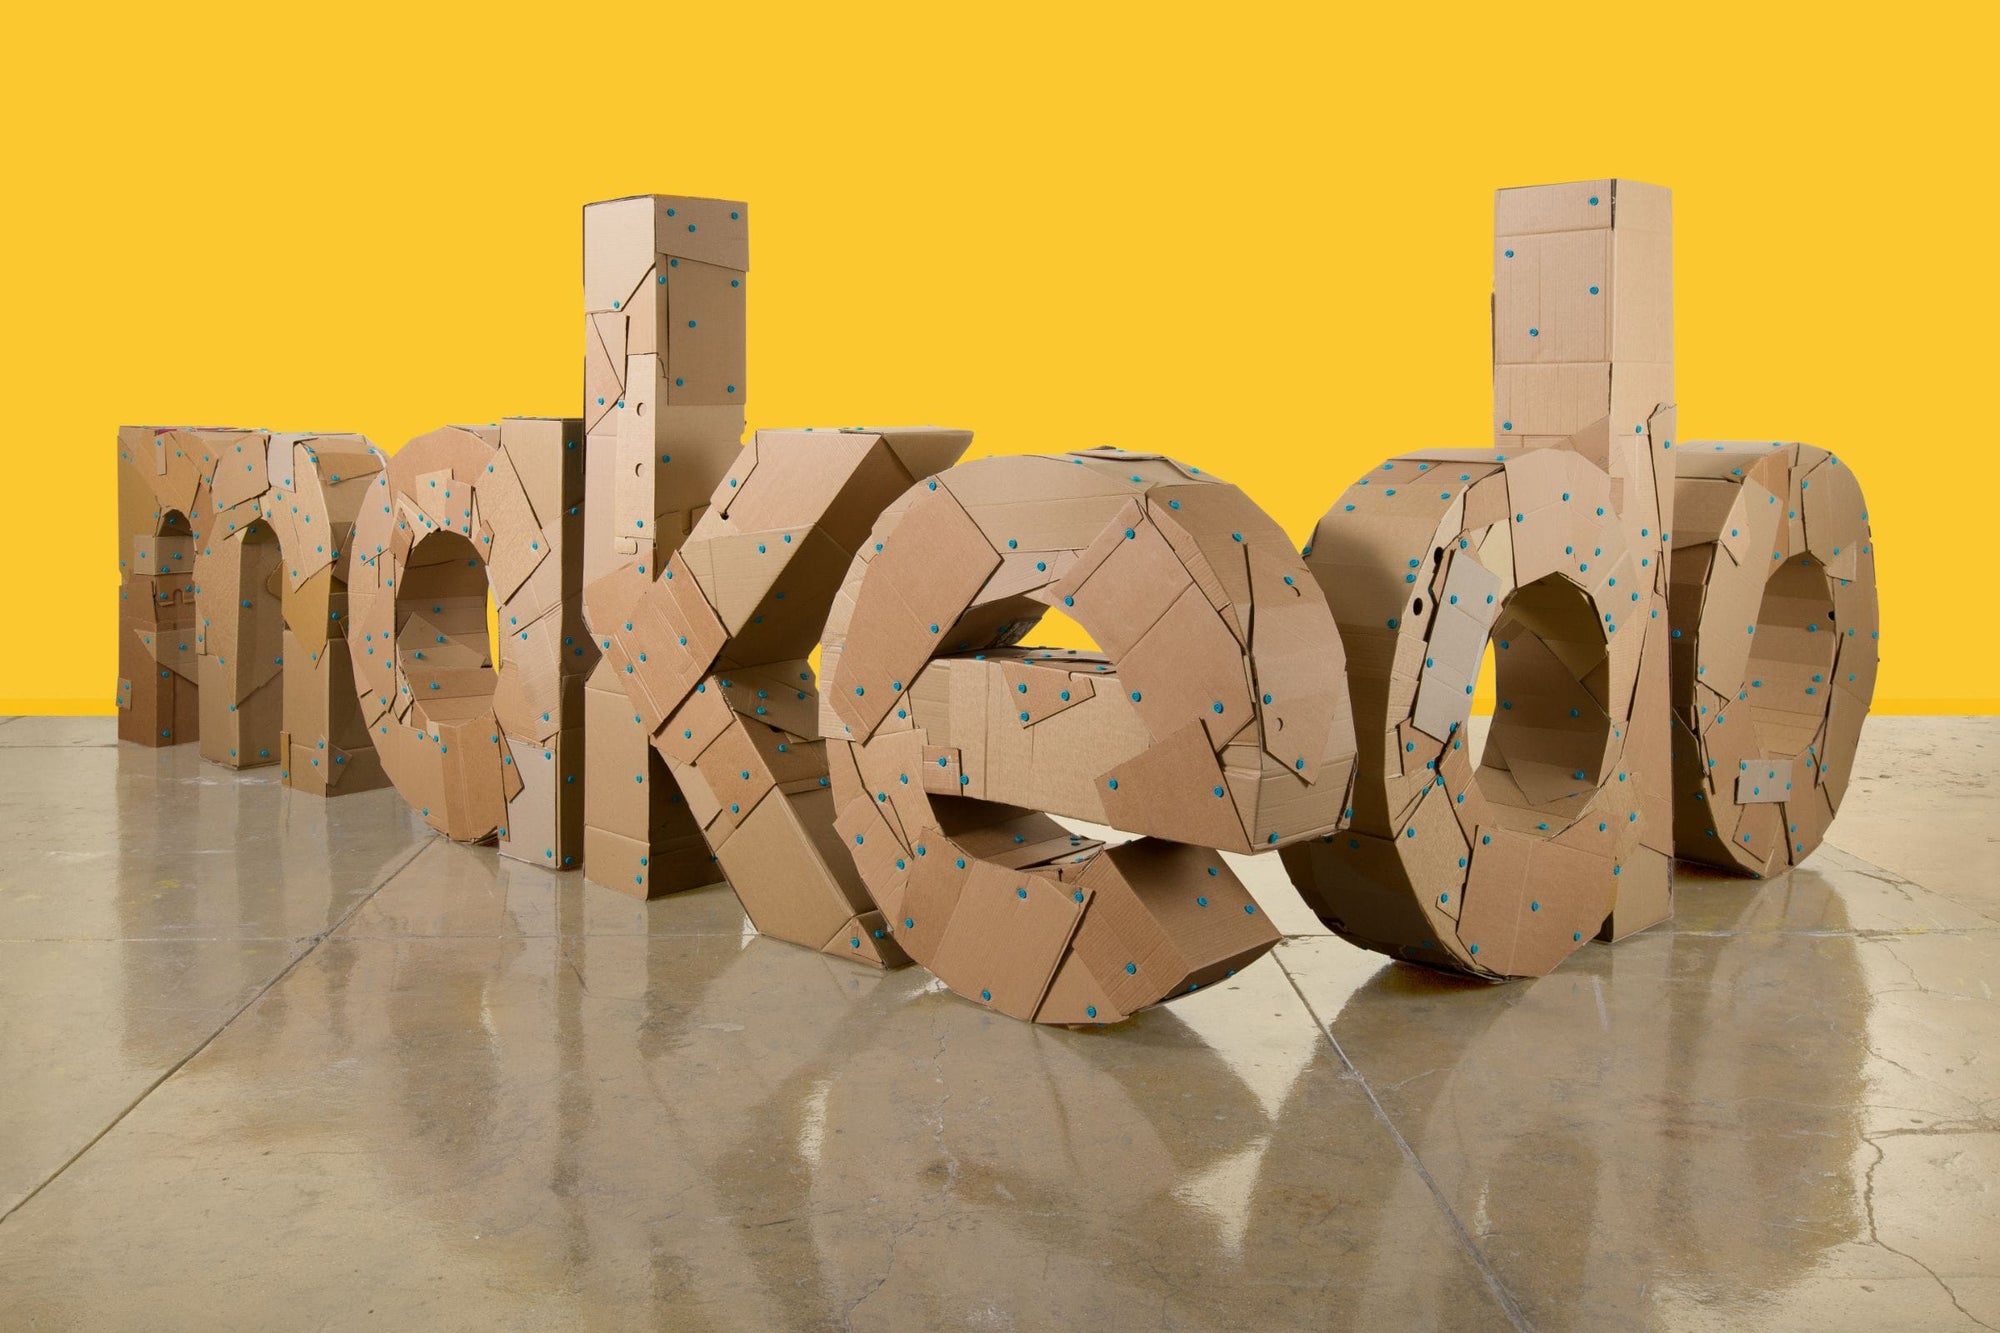 Makedo cardboard construction logo in 3d - built from cardboard, using Makedo